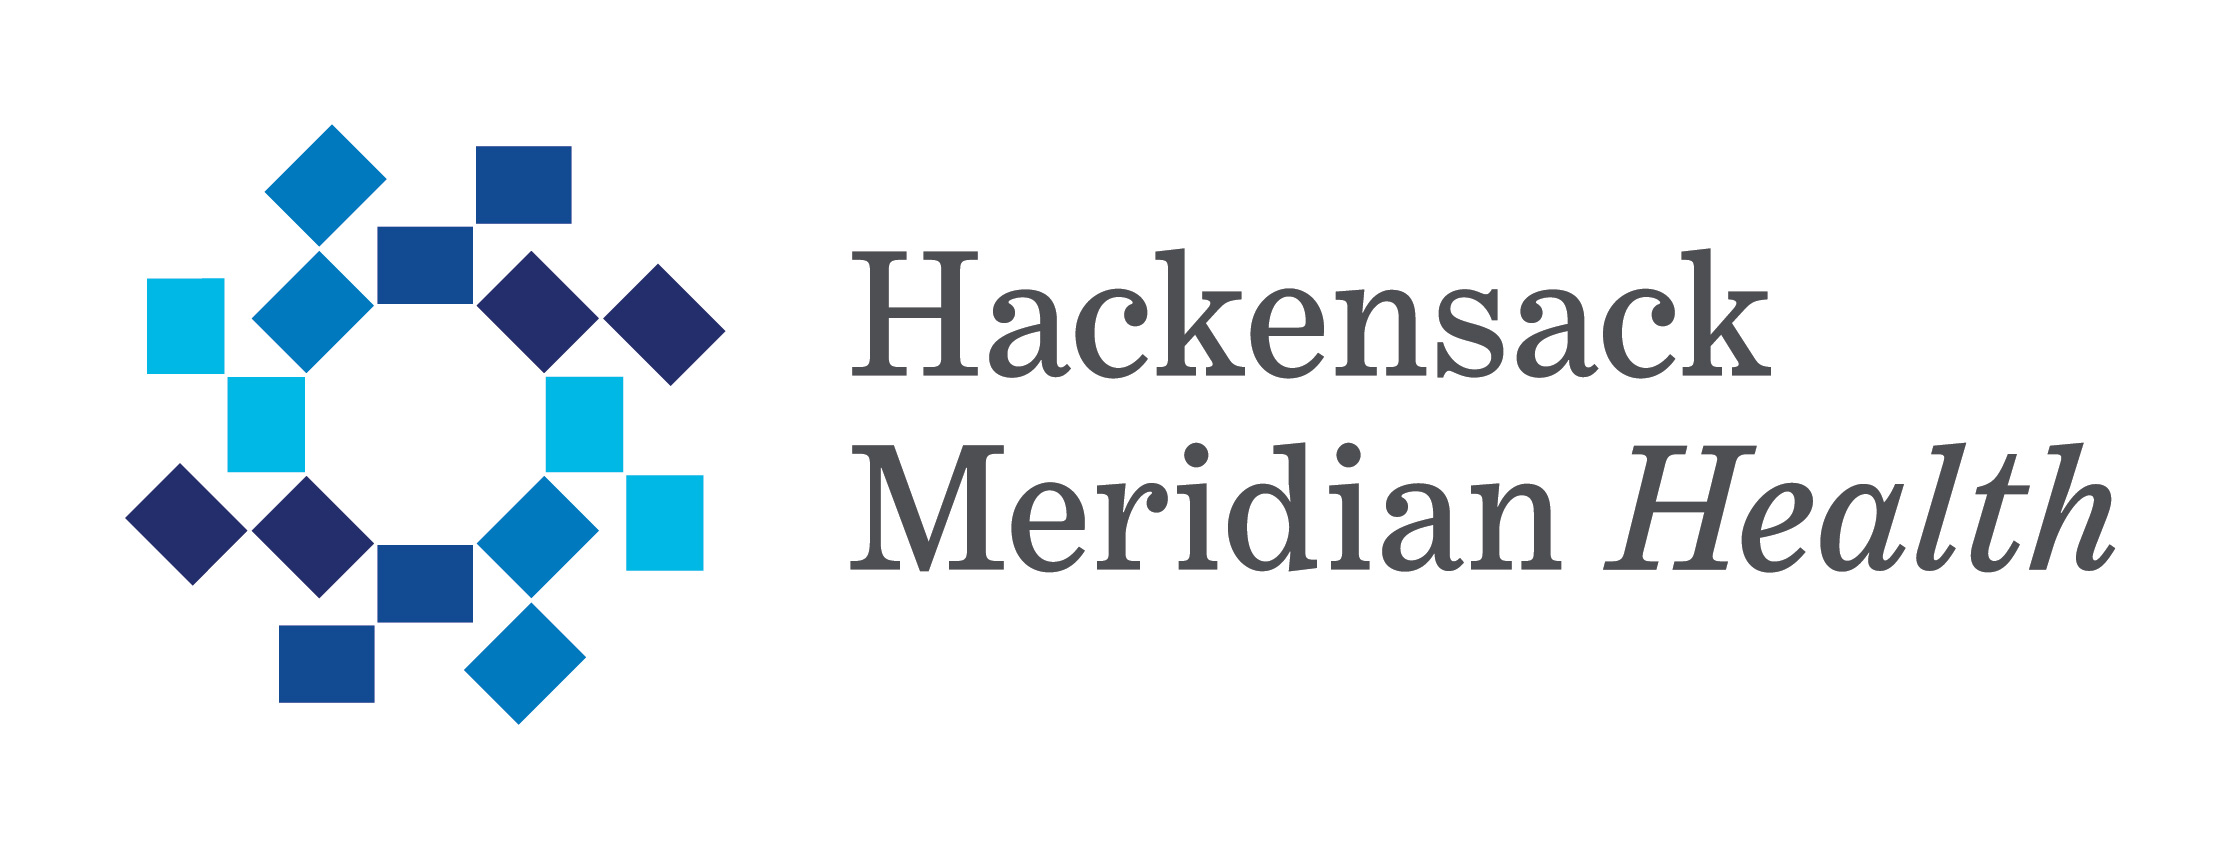 Hackensack Meridian Health unveils new brand